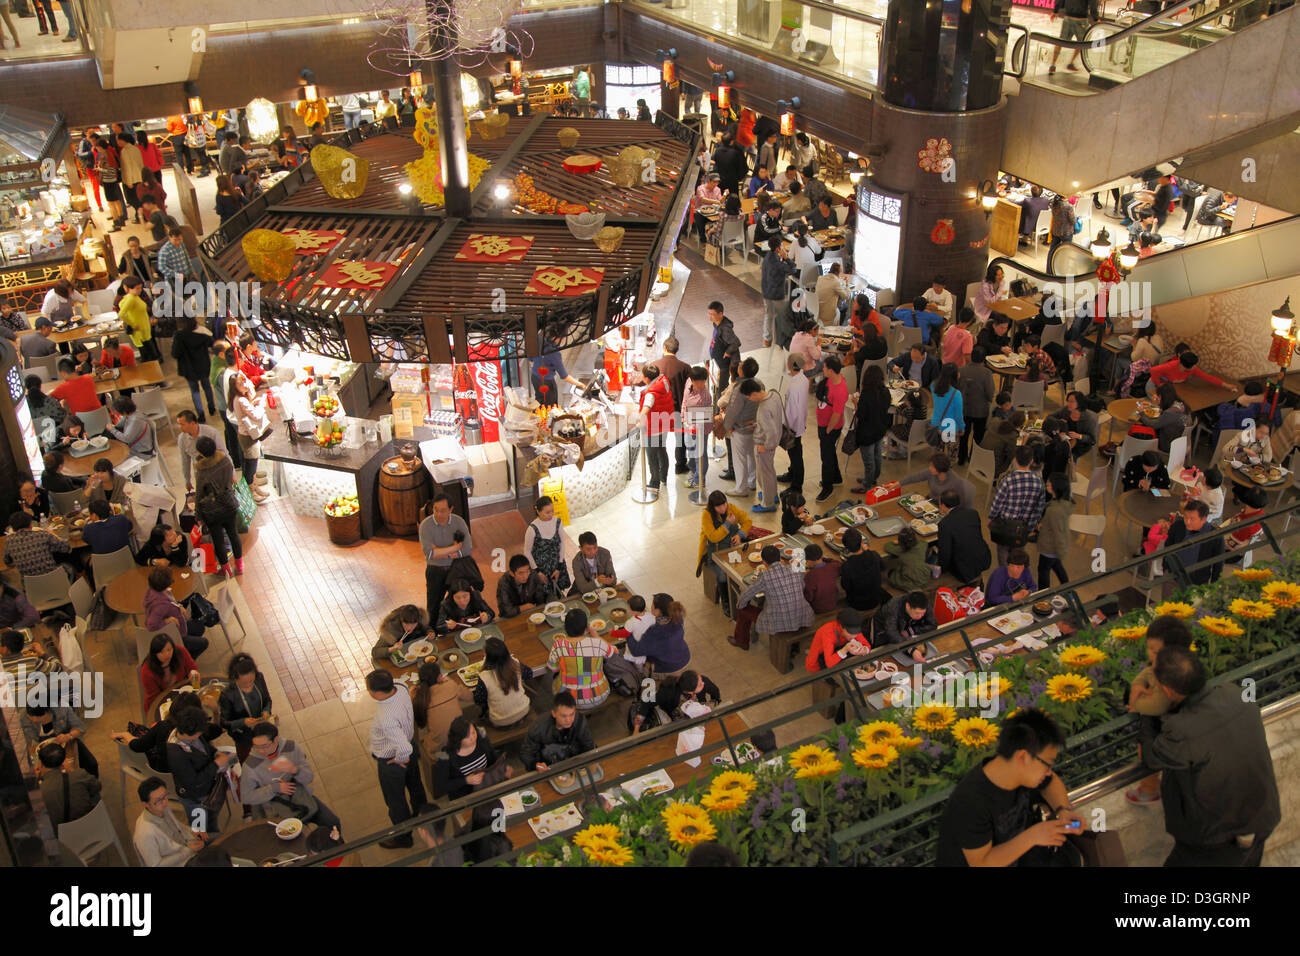 China, Hong Kong, Kowloon, food court, restaurants, people, dining, Stock Photo